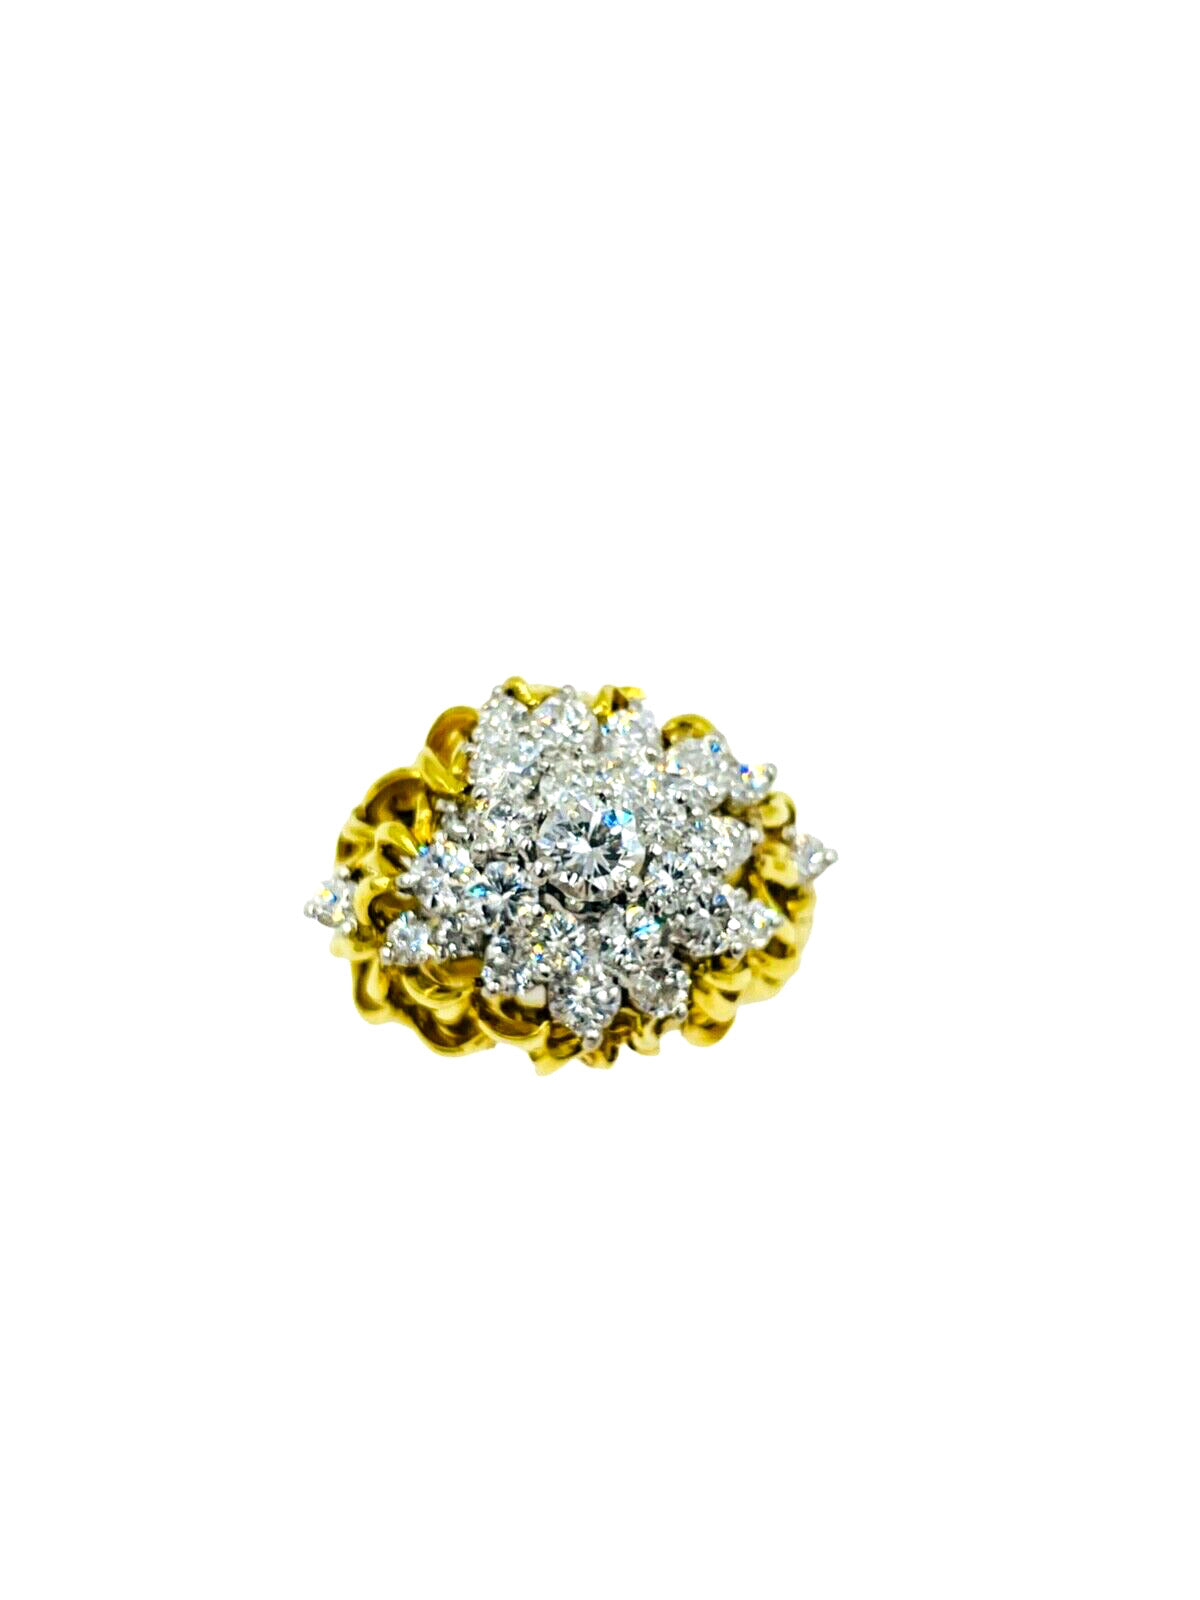 Kurt Wayne Diamond Cluster Yellow Gold Cocktail Ring